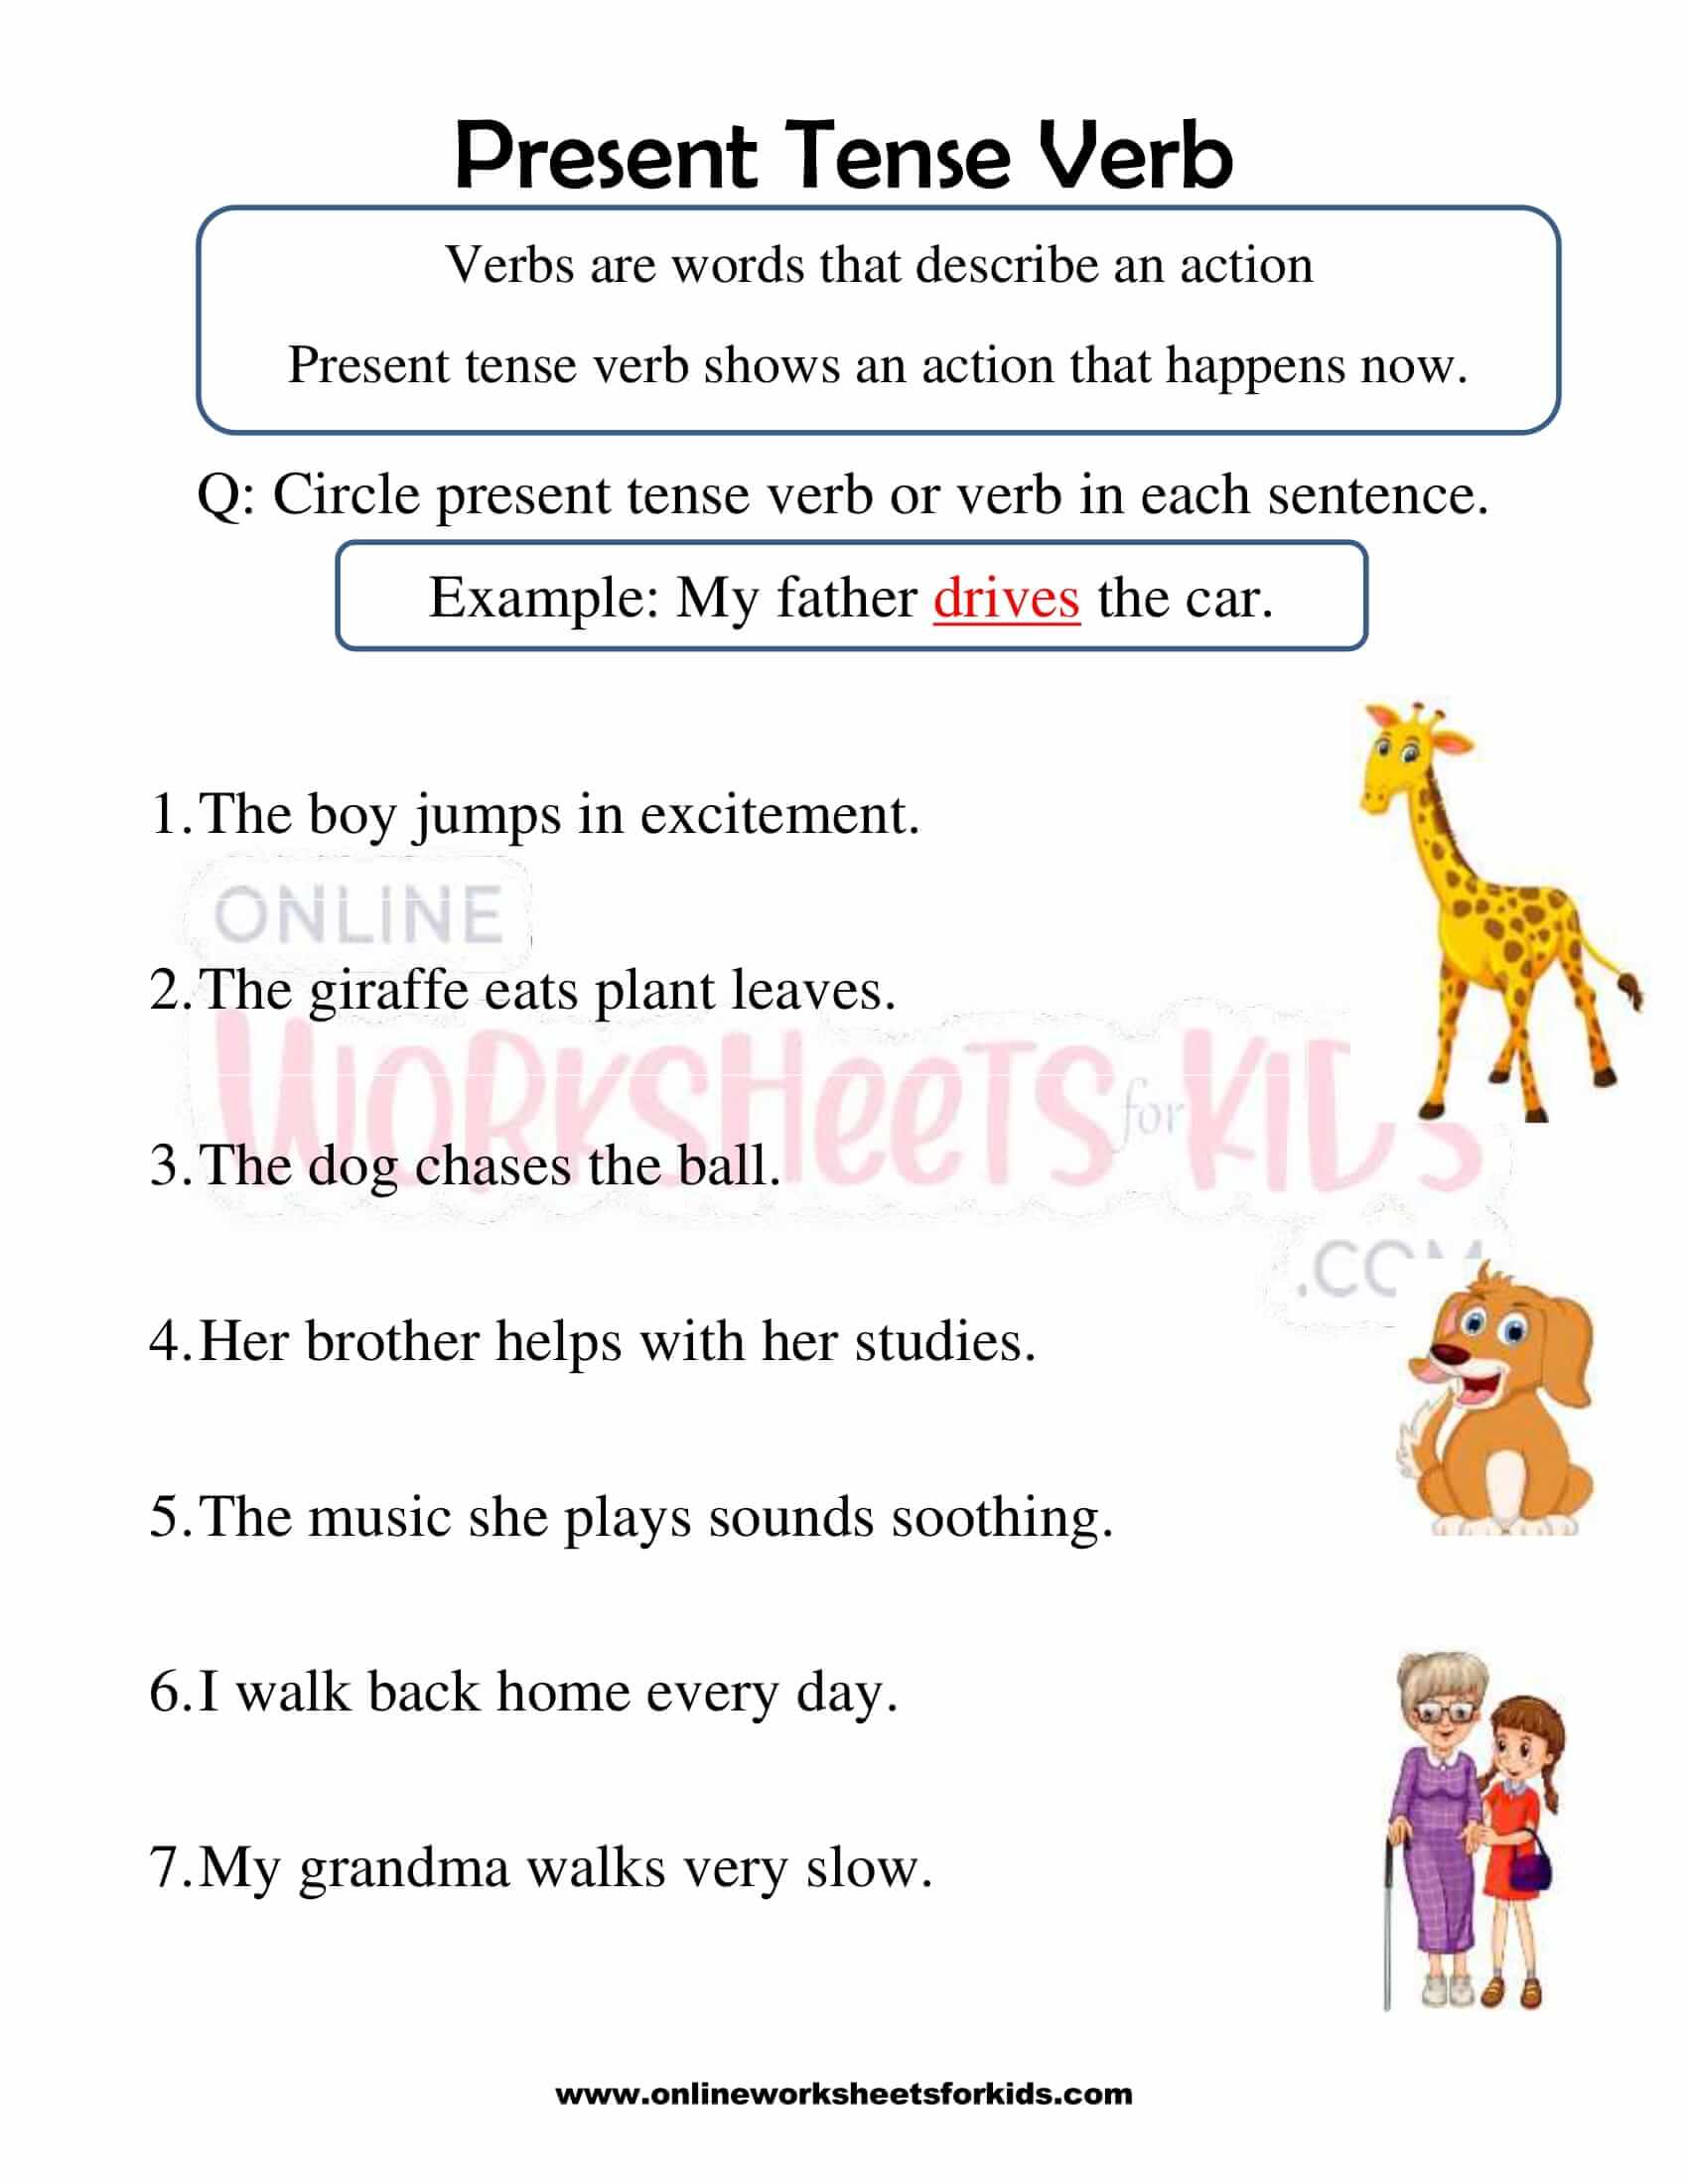 present-tense-verb-worksheet-1st-grade-4